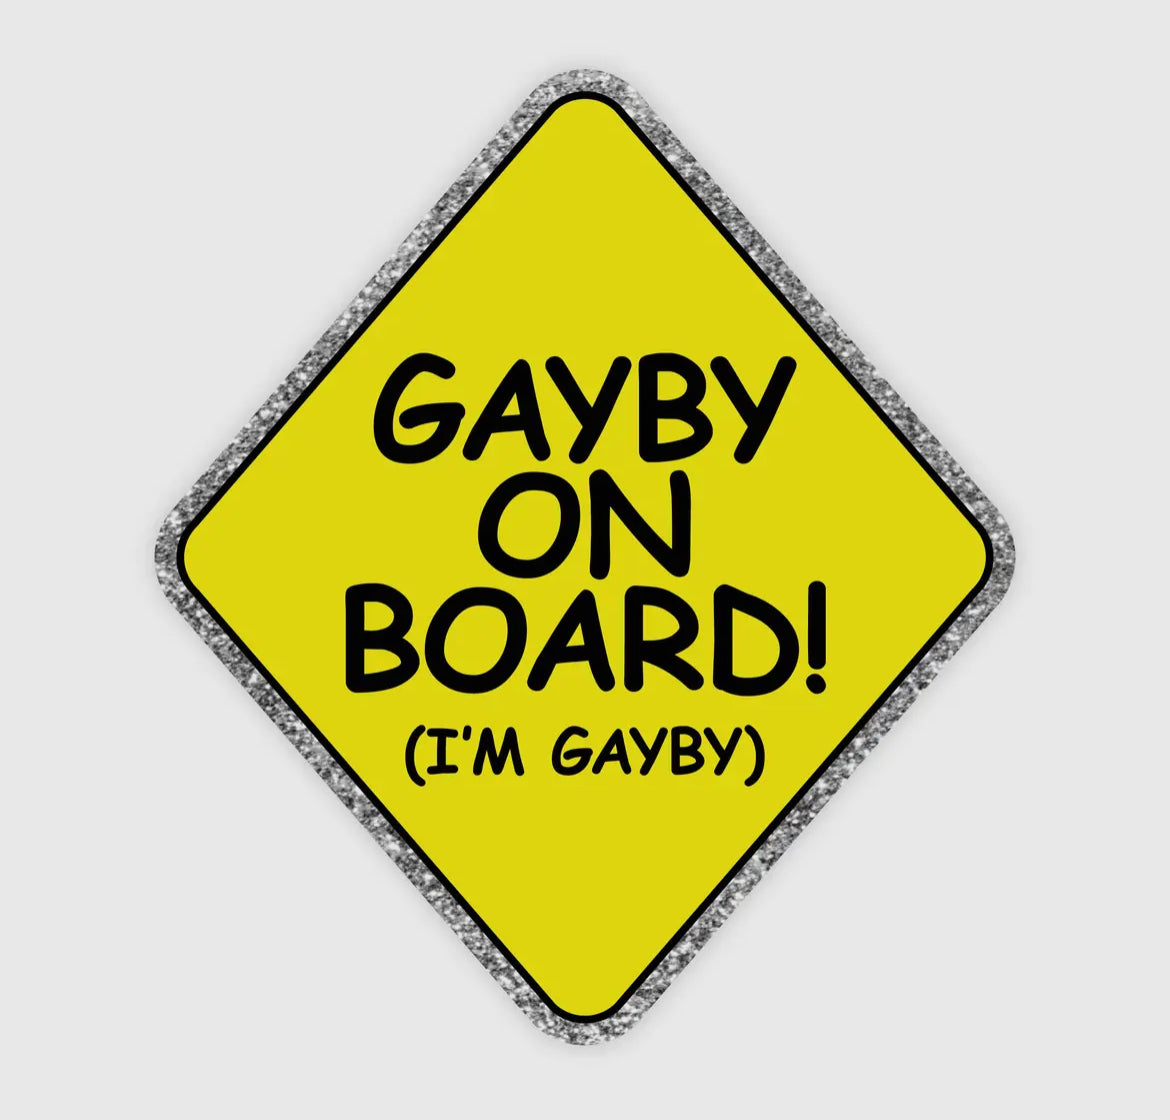 Gayby on Board Bumper Sticker